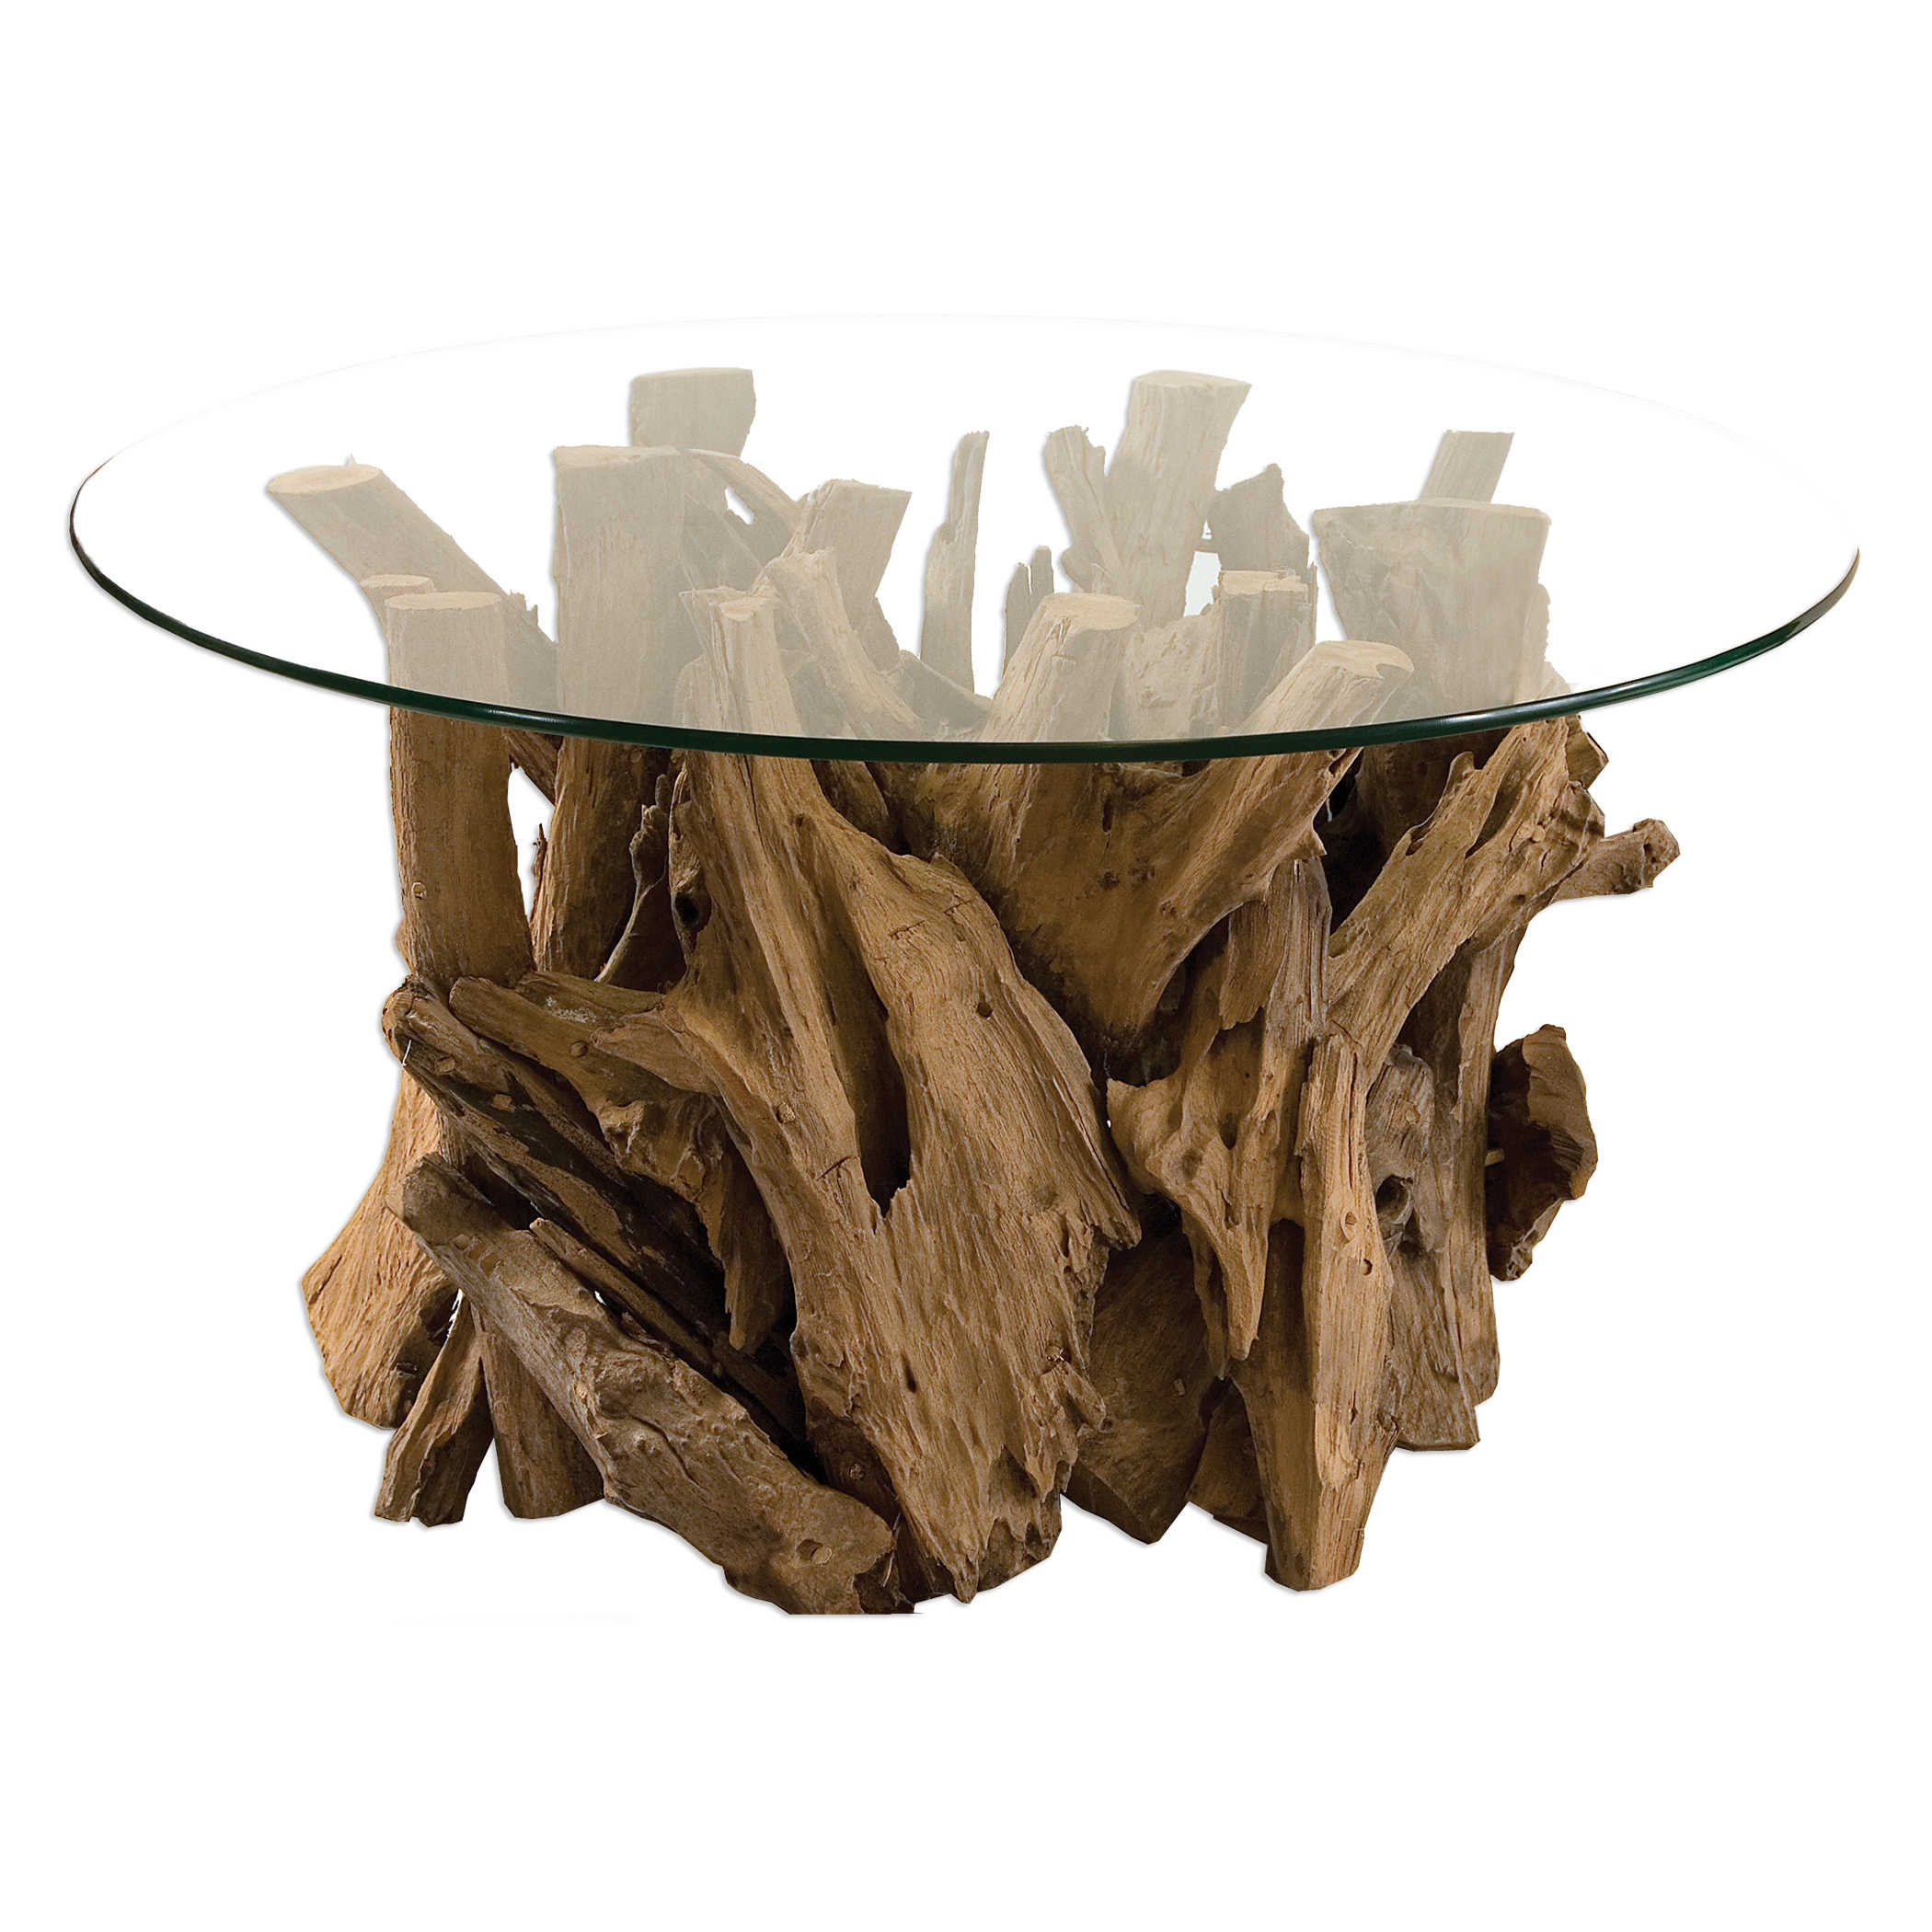 Teak Driftwood Cocktail Table – $1,125.00